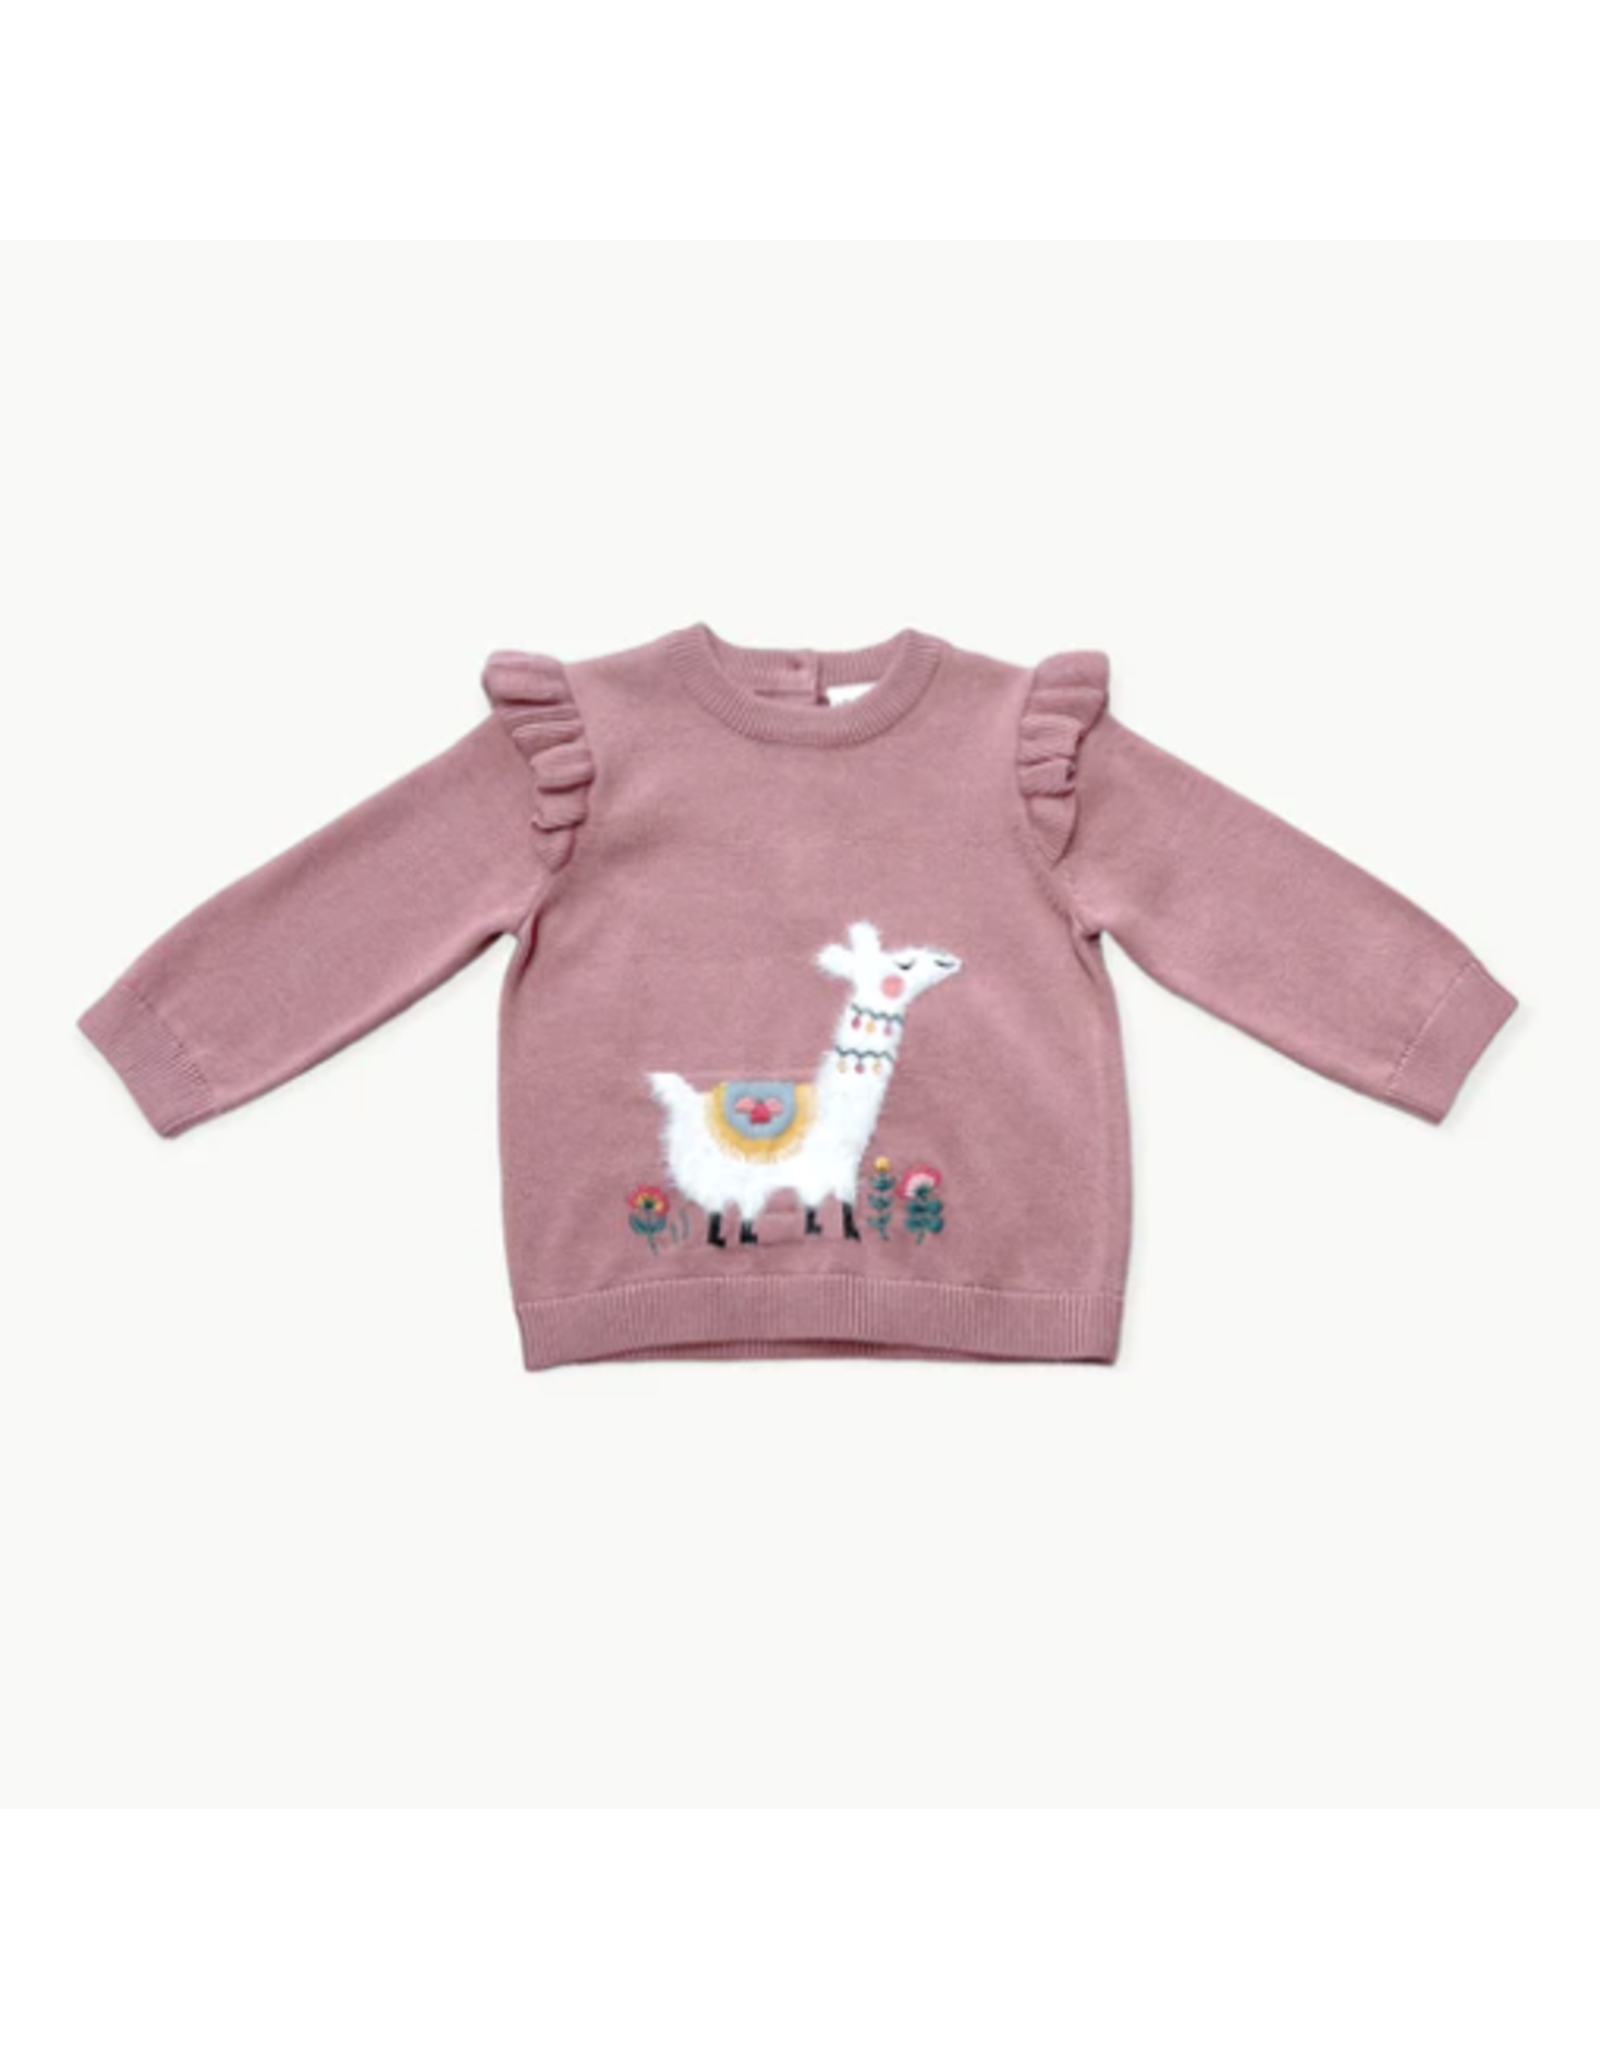 Furry Llama Baby Sweater, 3-6 mo., Vintage rose